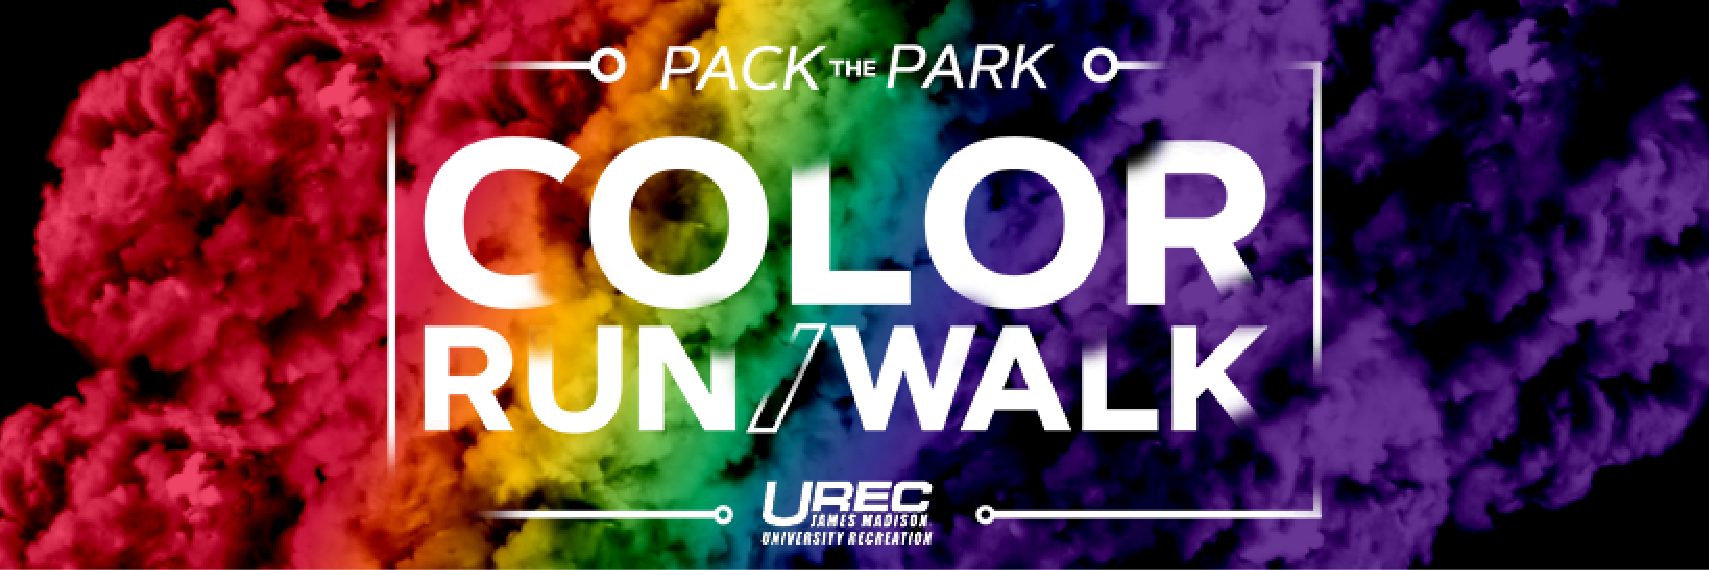 Pack the Park Color Run/Walk JMU